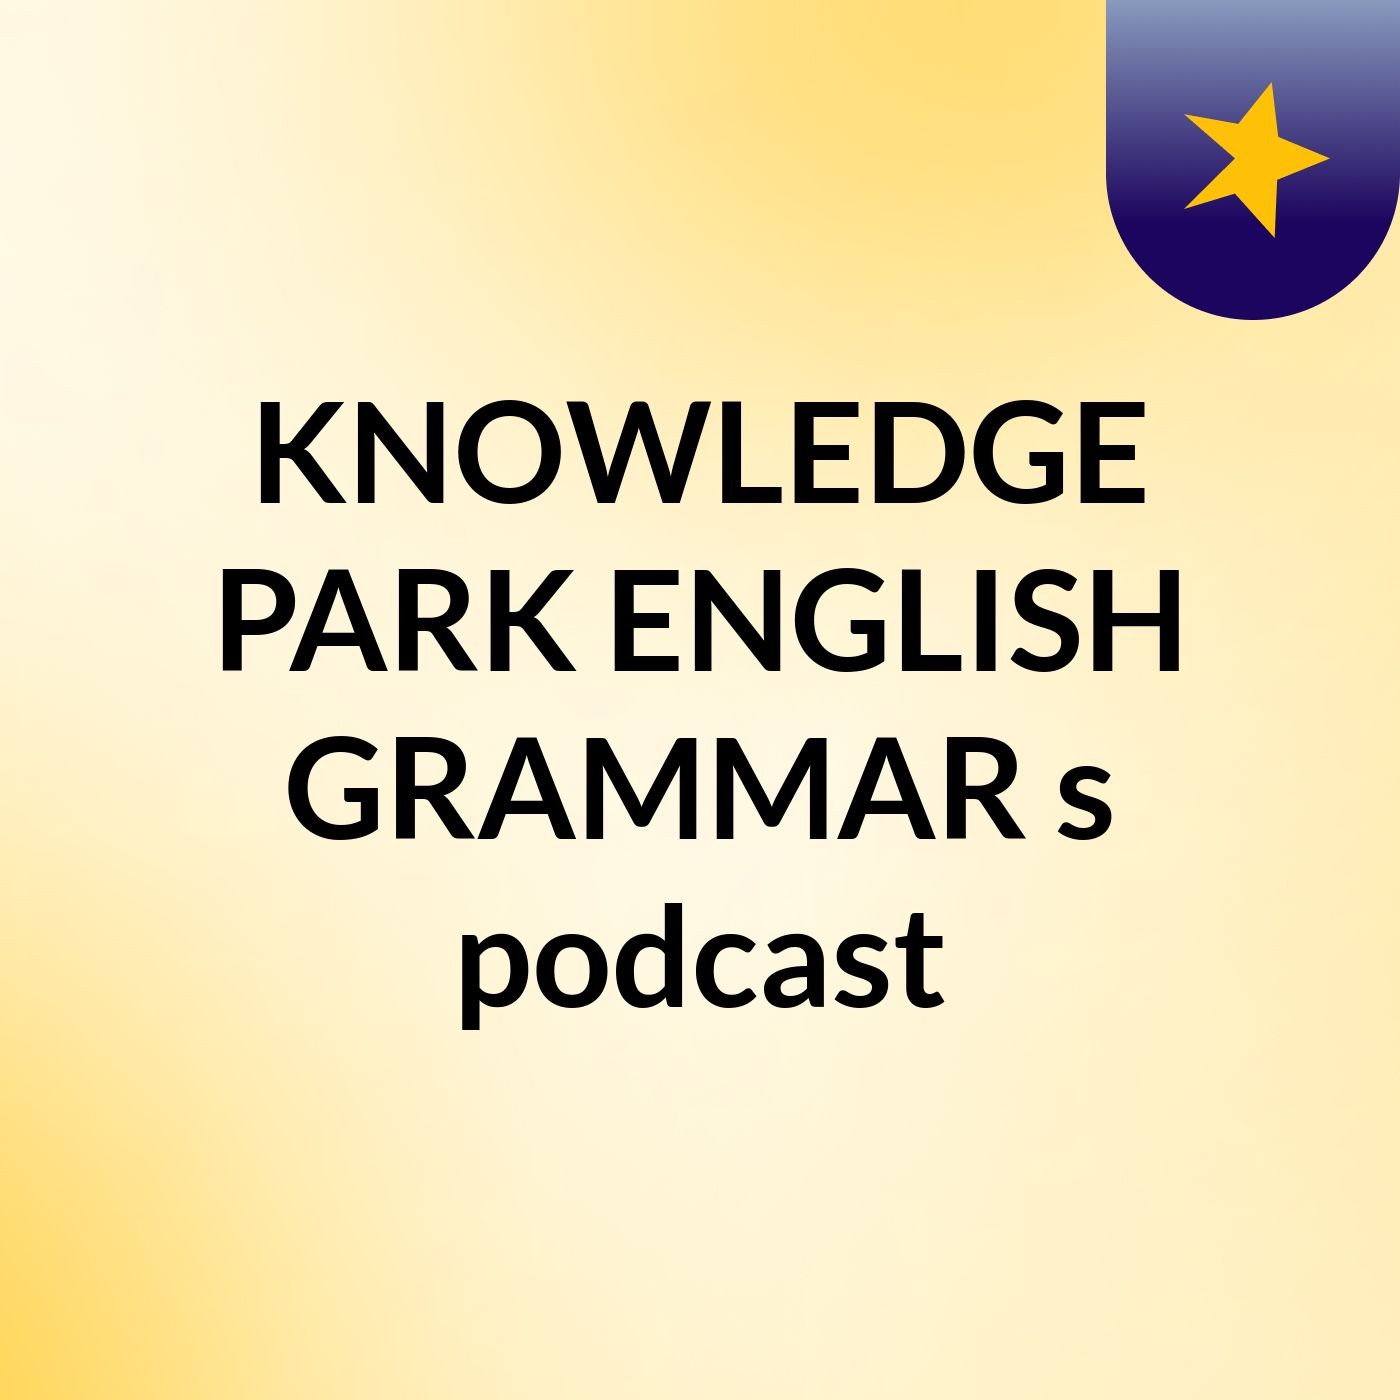 Episode 2 - KNOWLEDGE PARK ENGLISH GRAMMAR's podcast